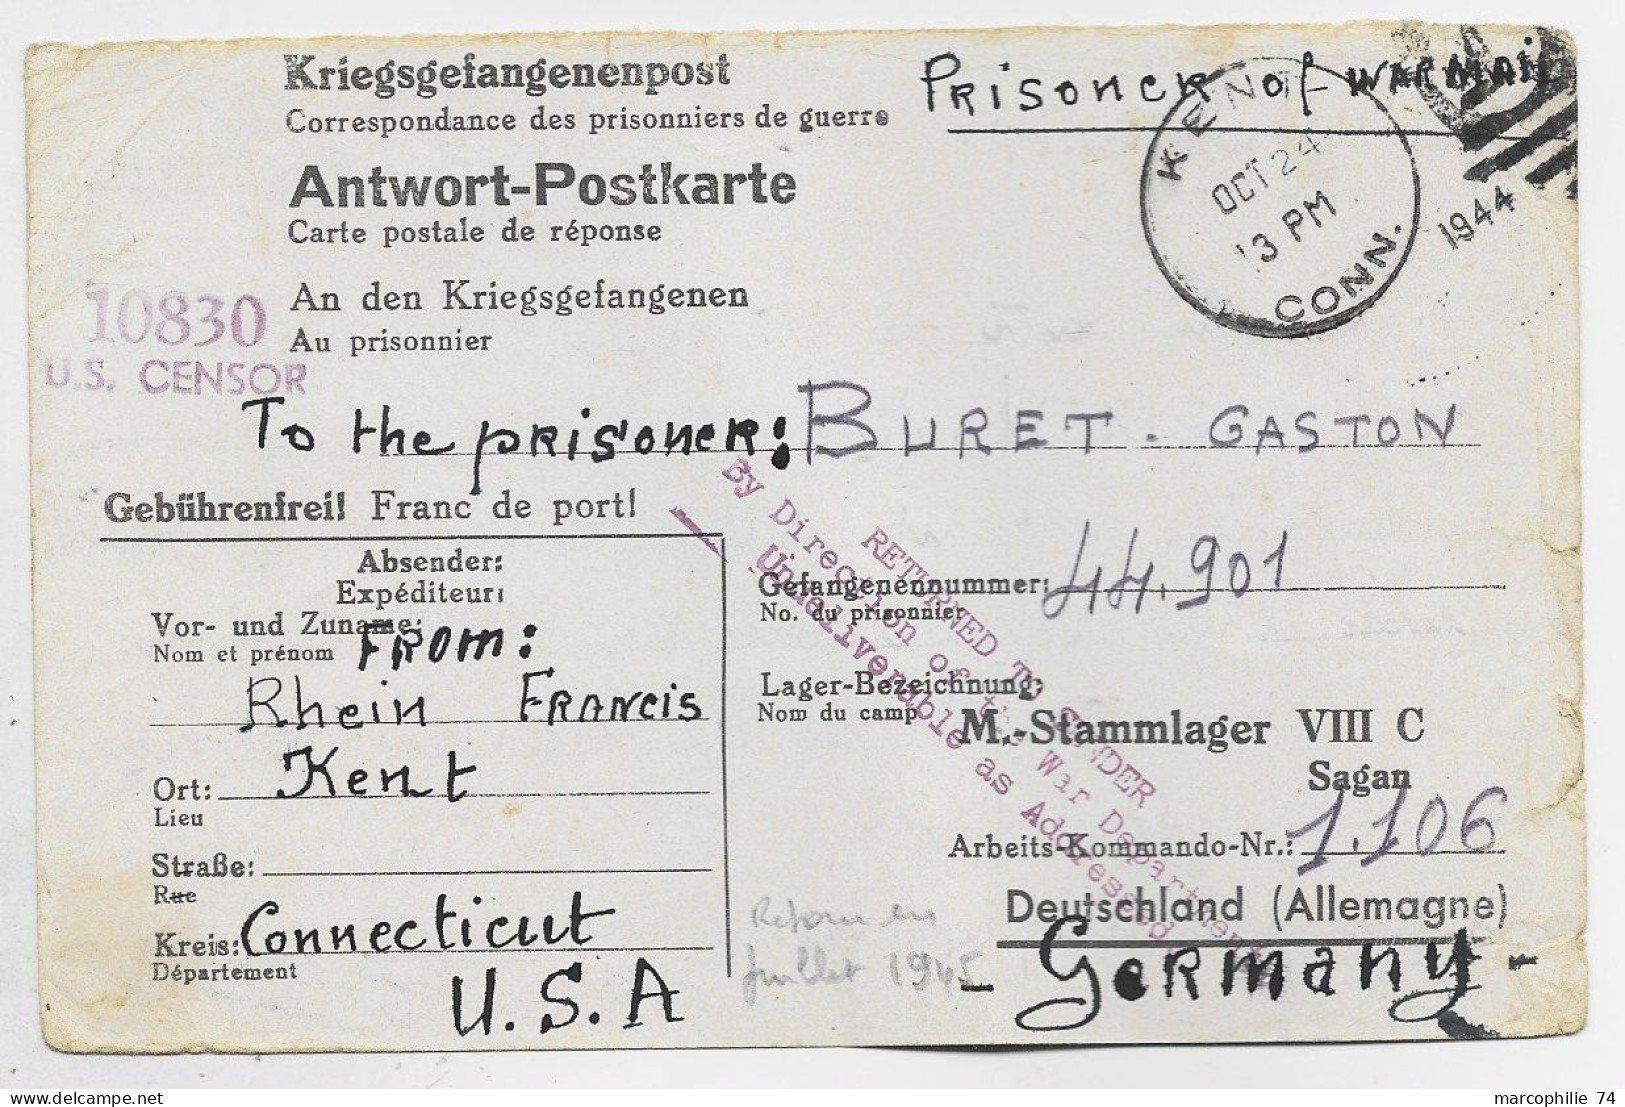 GERMANY STALAG POSTKARTE THE PRISONER KENT CONNECTICUT 1944 + US CENSOR 10830+ RETURN TO SENDER DIRECTION OF WAR - Covers & Documents